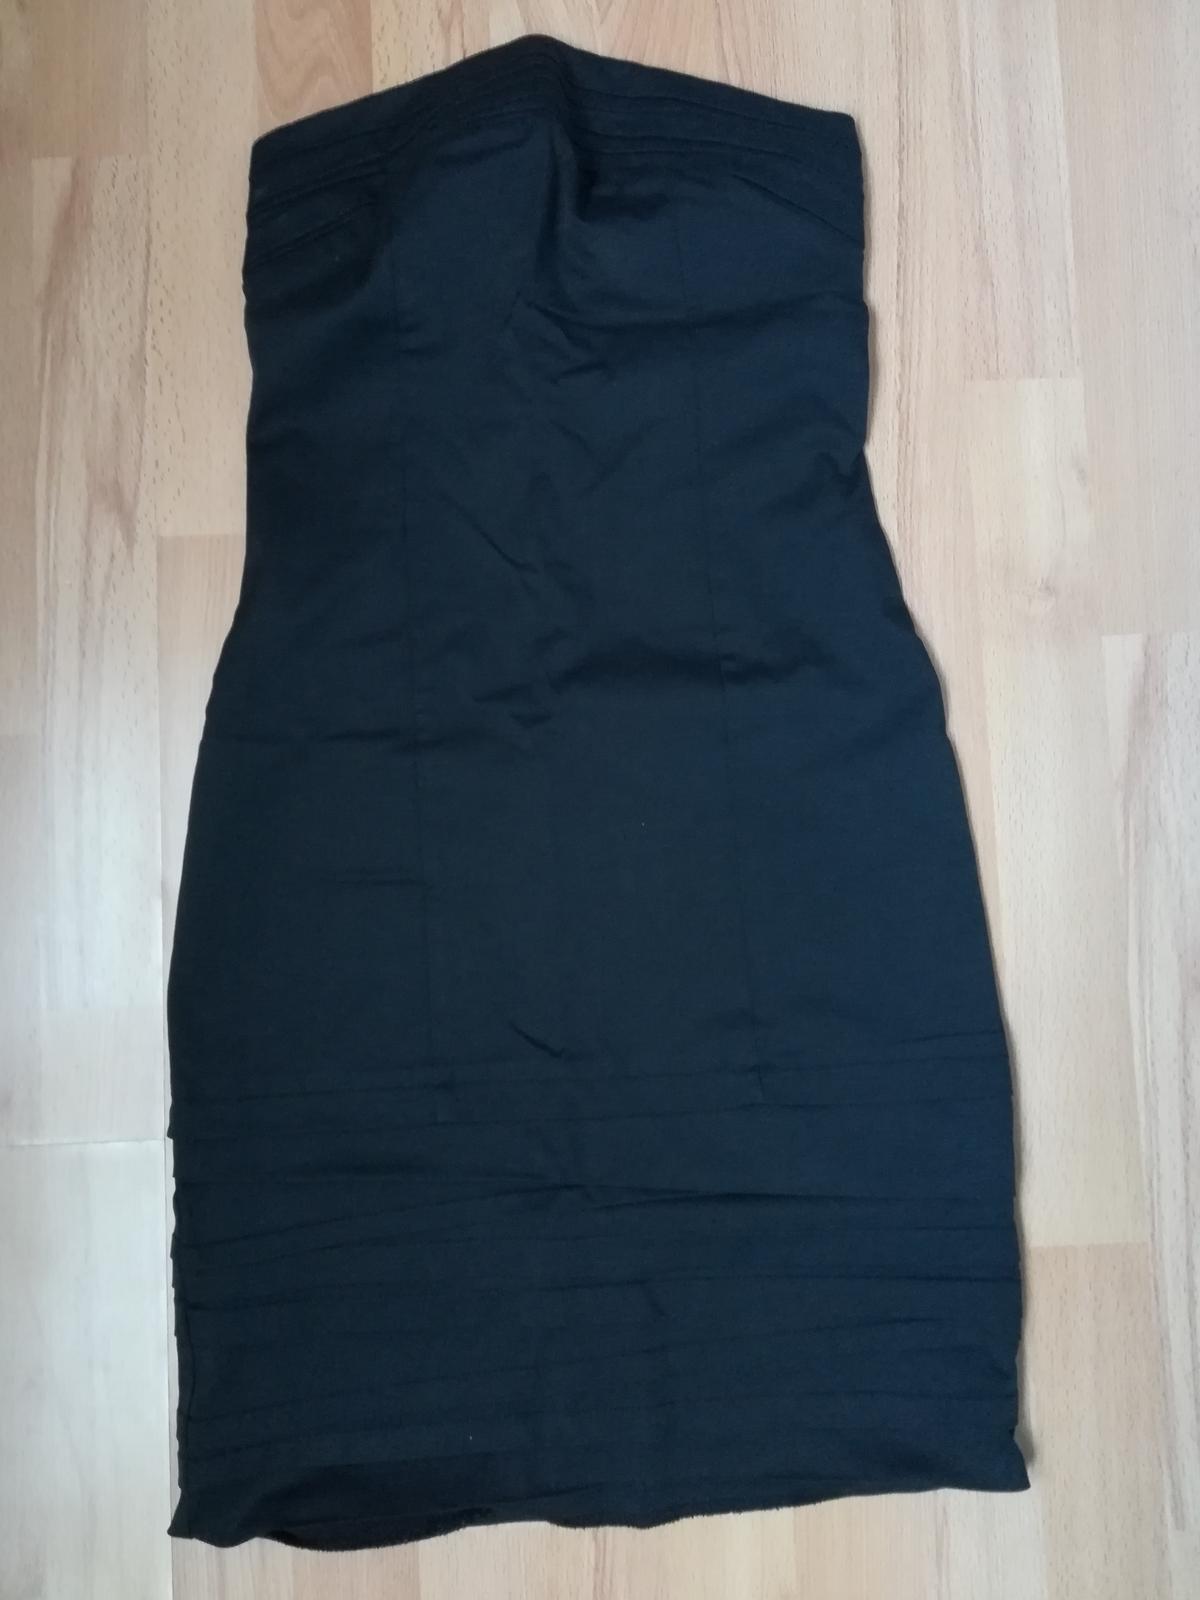 čierne šaty - Obrázok č. 1